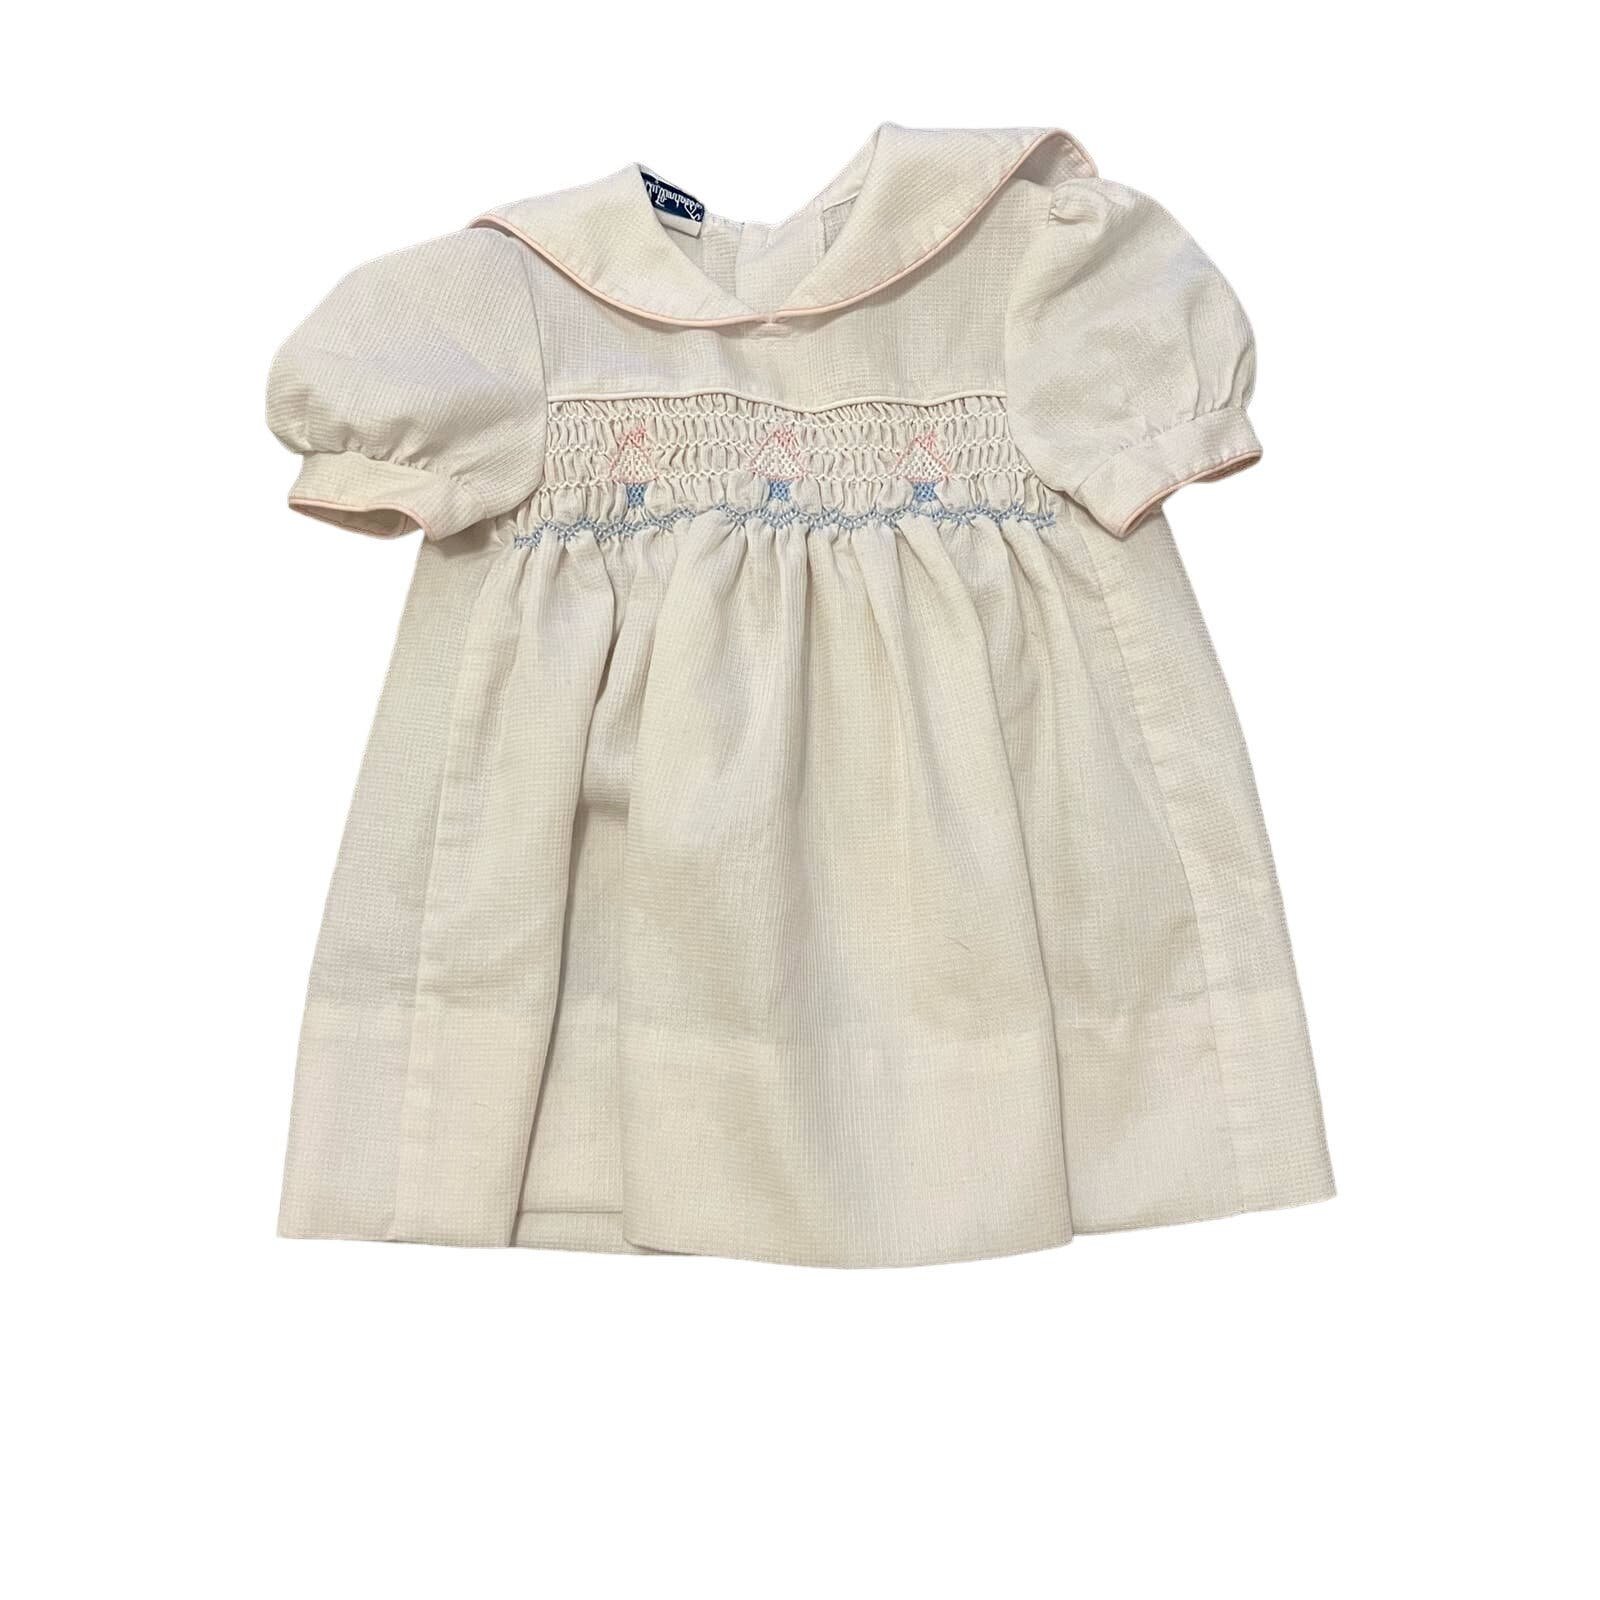 Vintage Polly Flinders Girls Smocked Dress (no size tag) 8kJKCCWDF